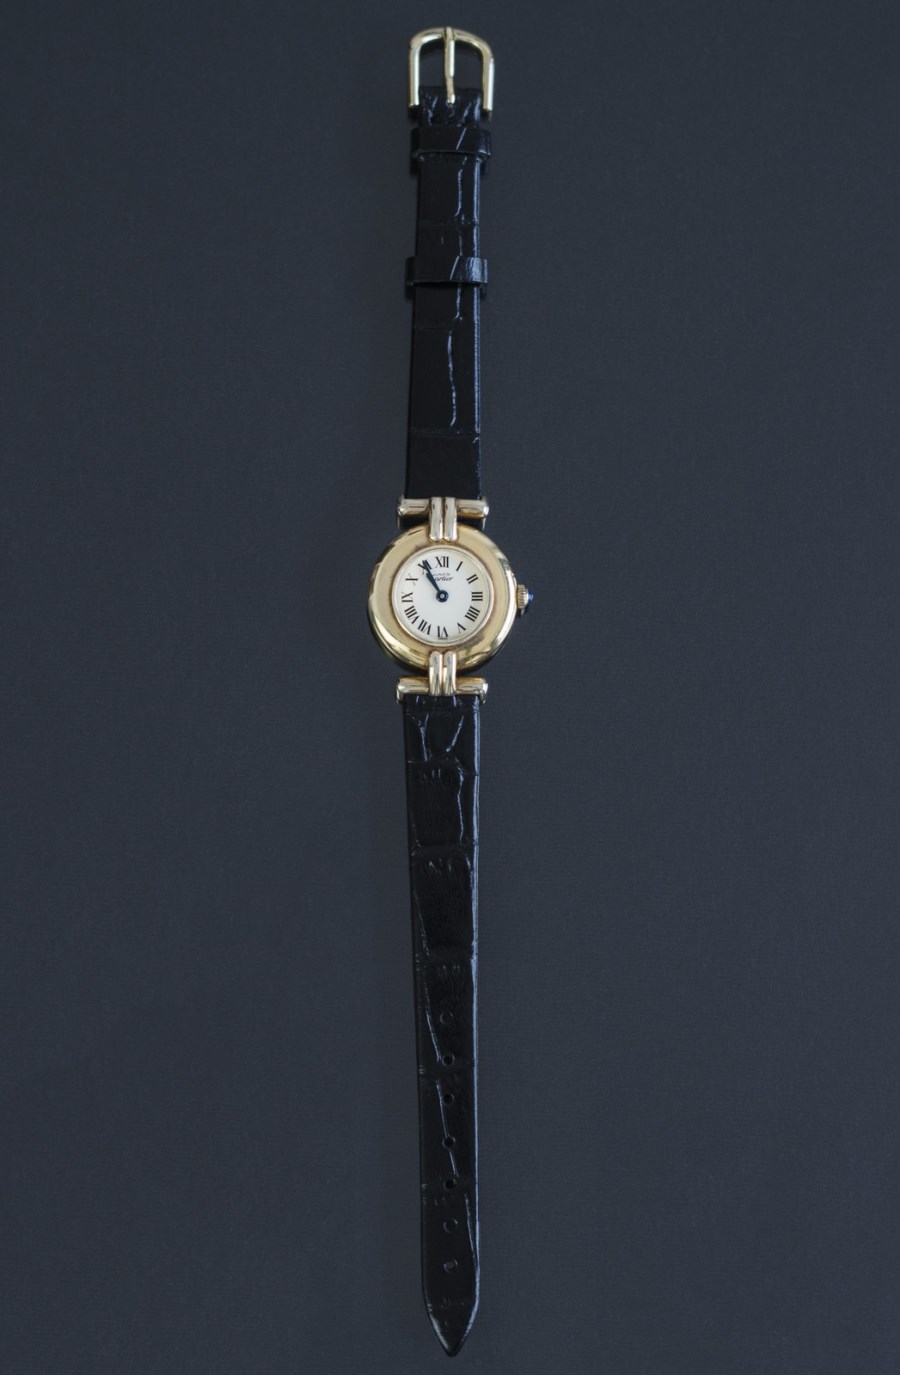 Orologio Cartier donna in vermeil con movimento al quarzo.  ( Cartier)